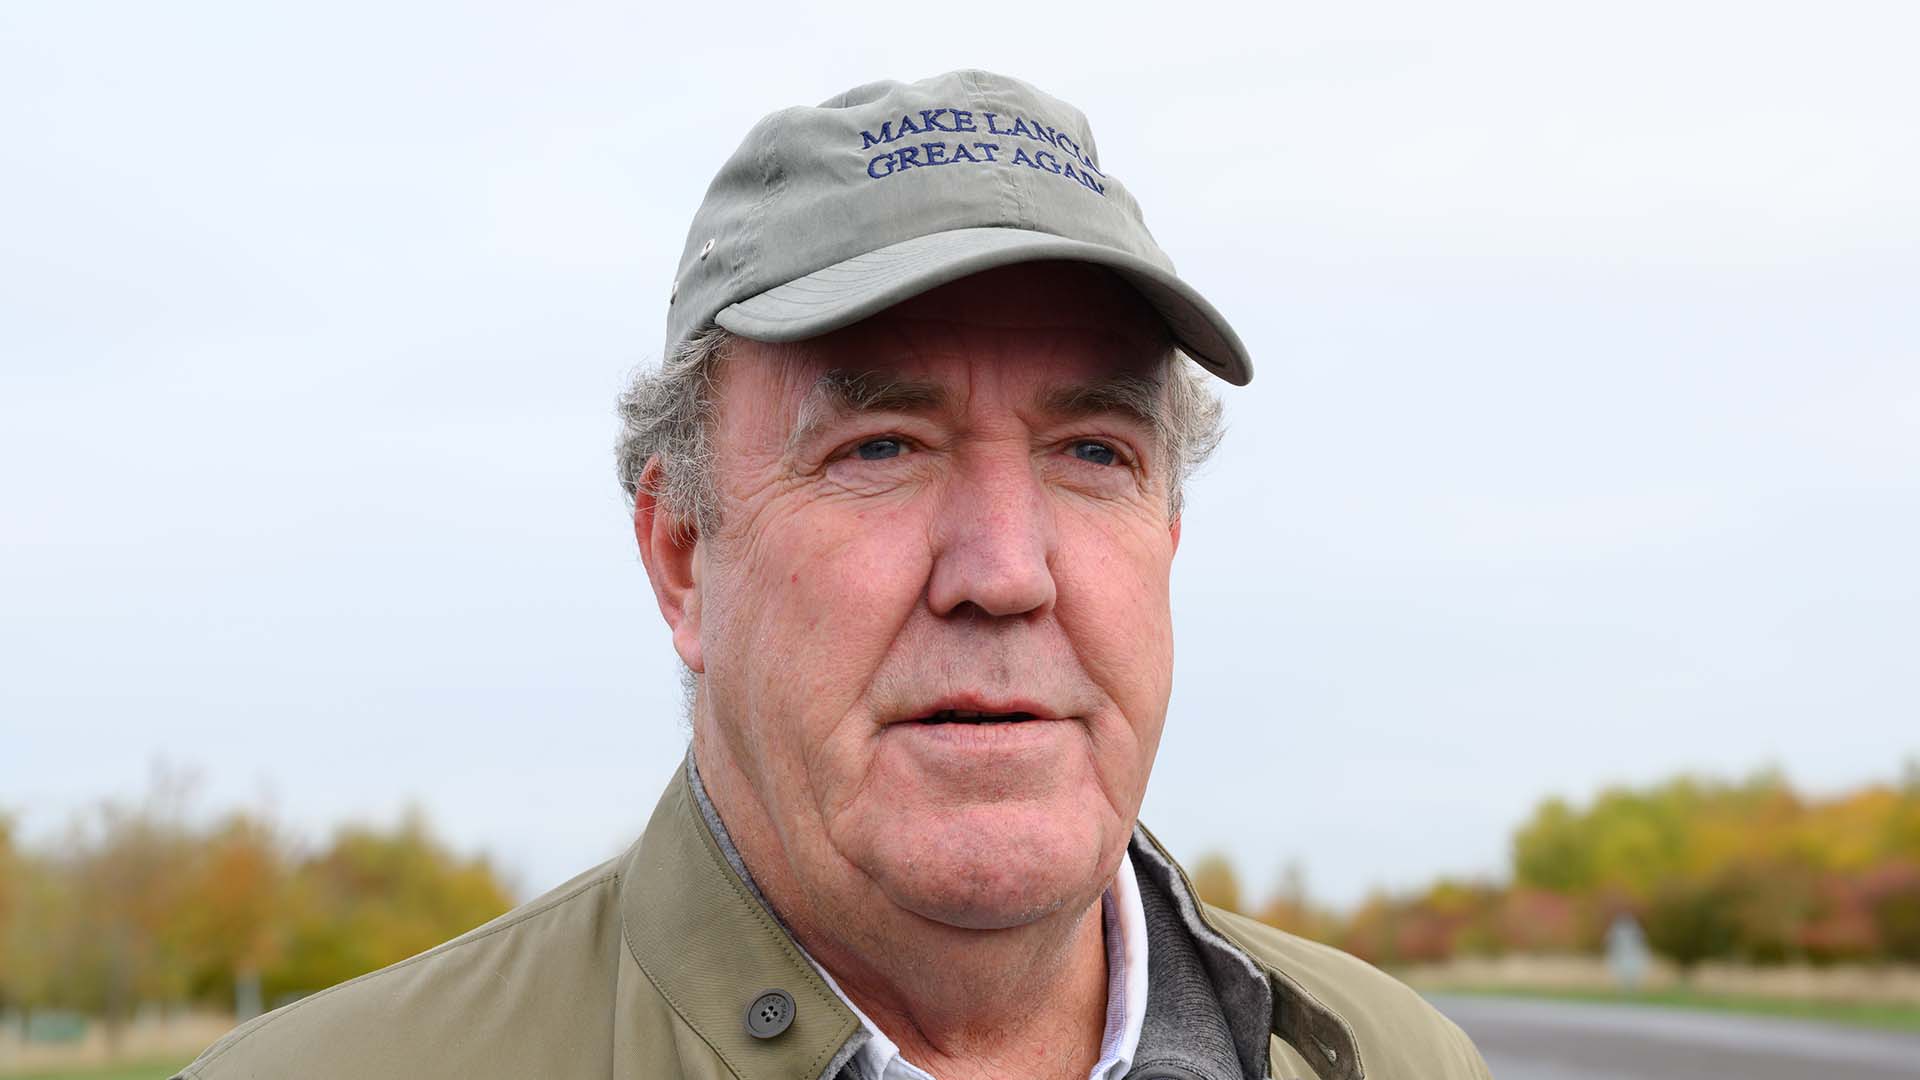 Jeremy Clarkson farm shop to open